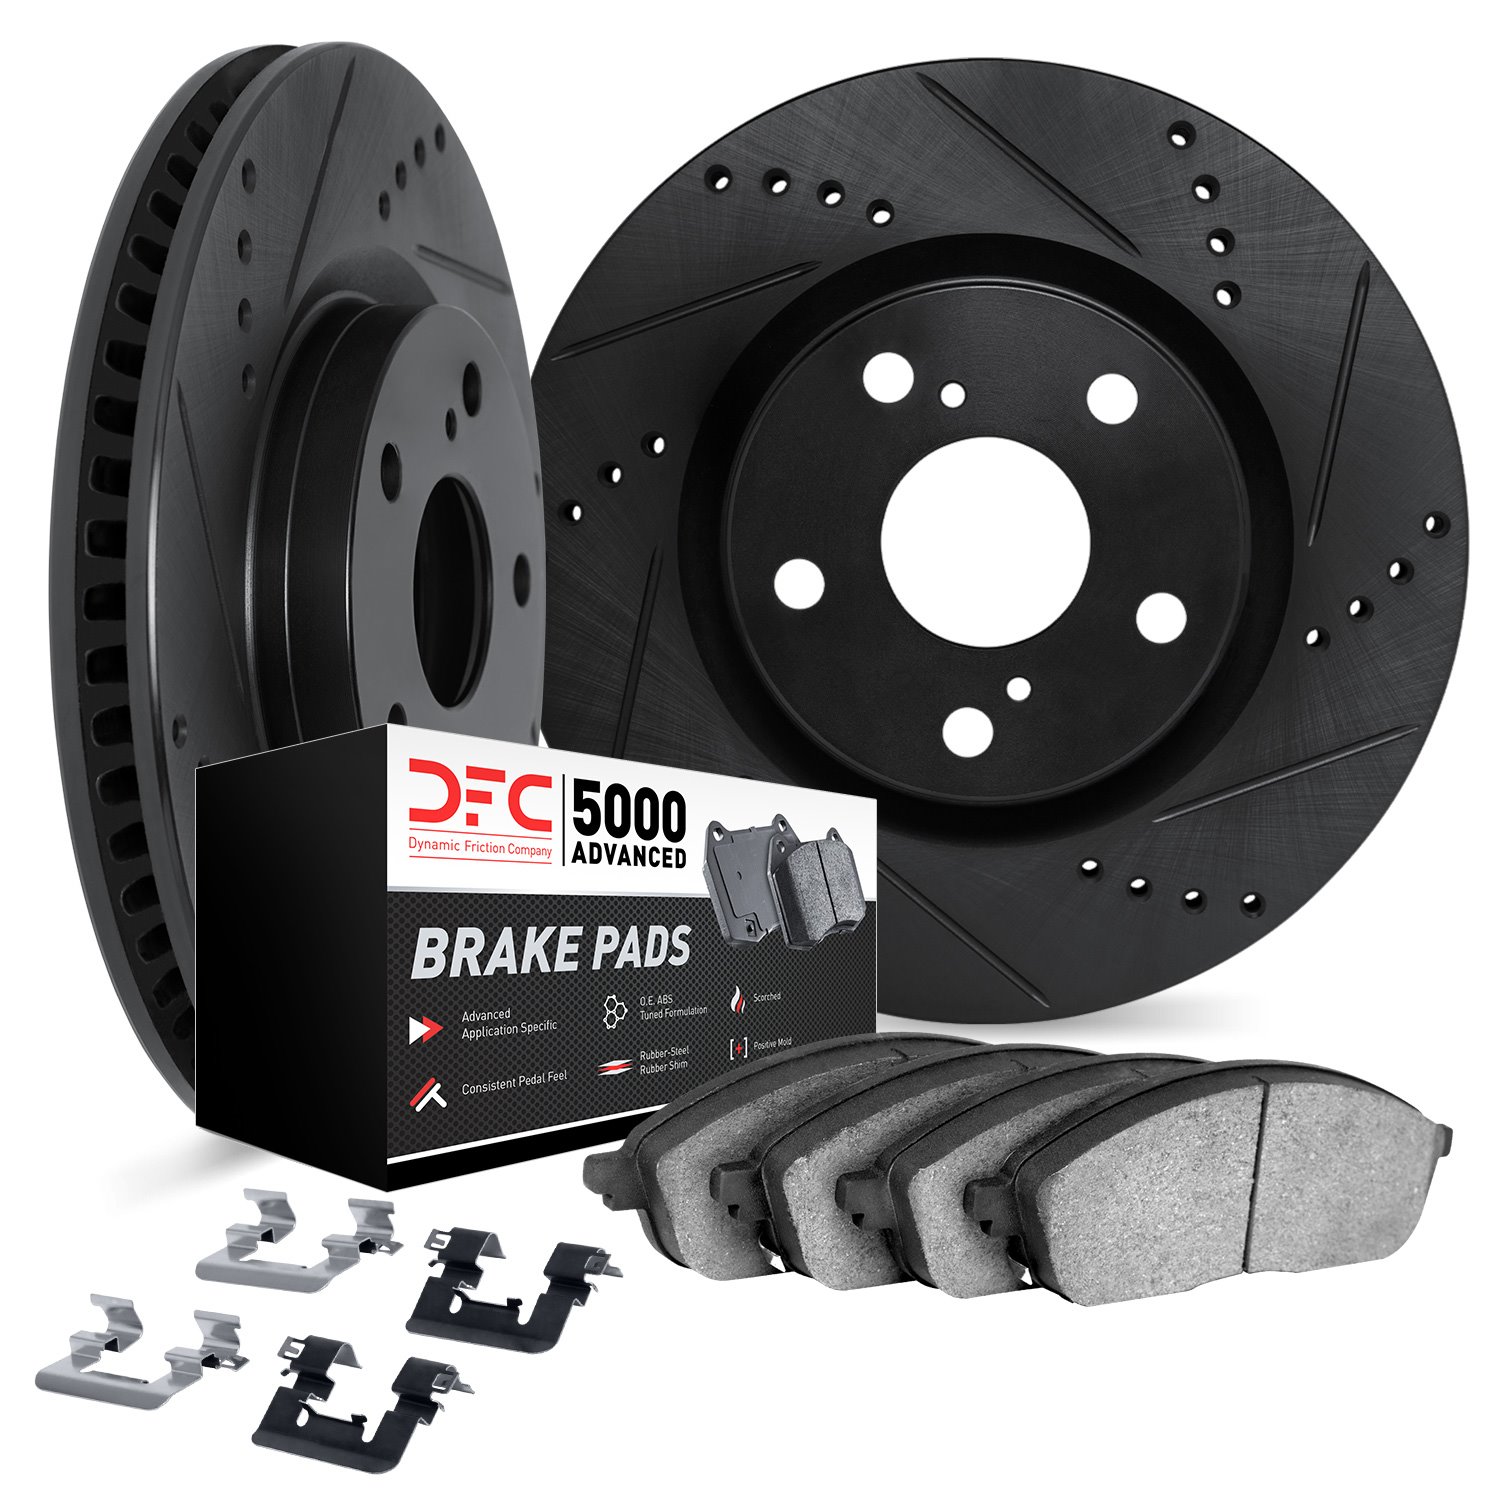 8512-54174 Drilled/Slotted Brake Rotors w/5000 Advanced Brake Pads Kit & Hardware [Black], 2009-2012 Ford/Lincoln/Mercury/Mazda,